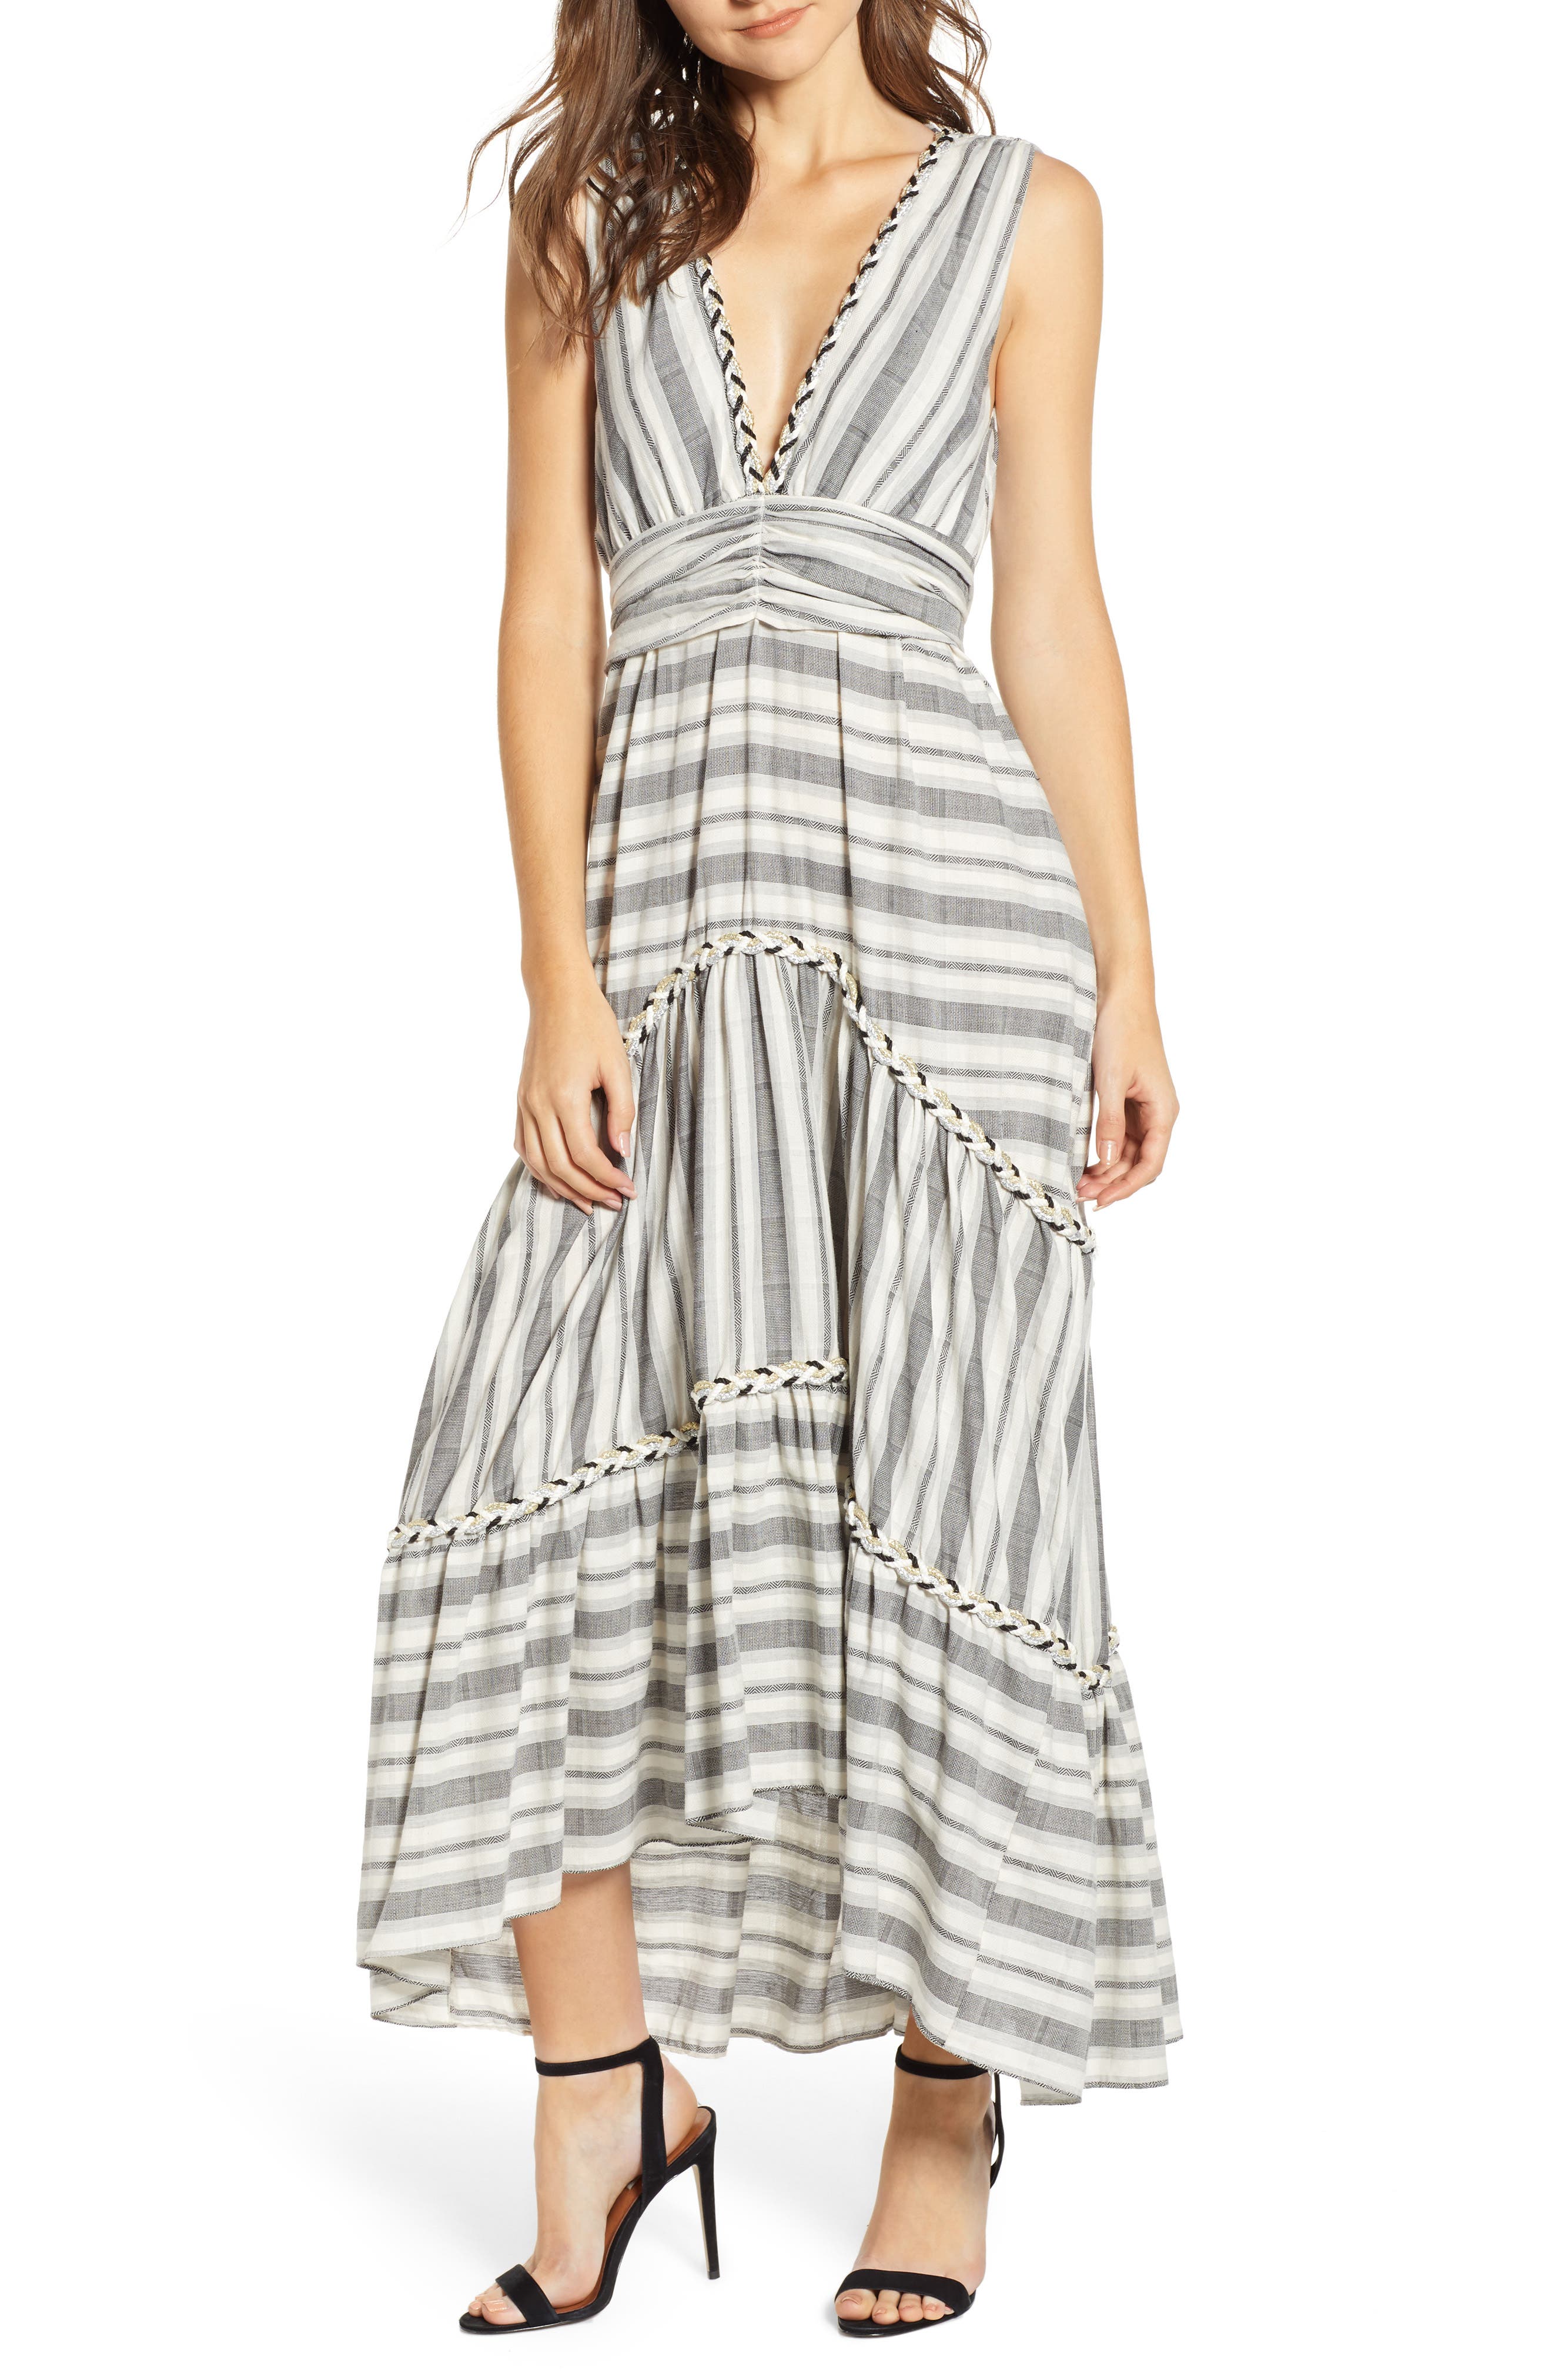 black and white striped a line dress